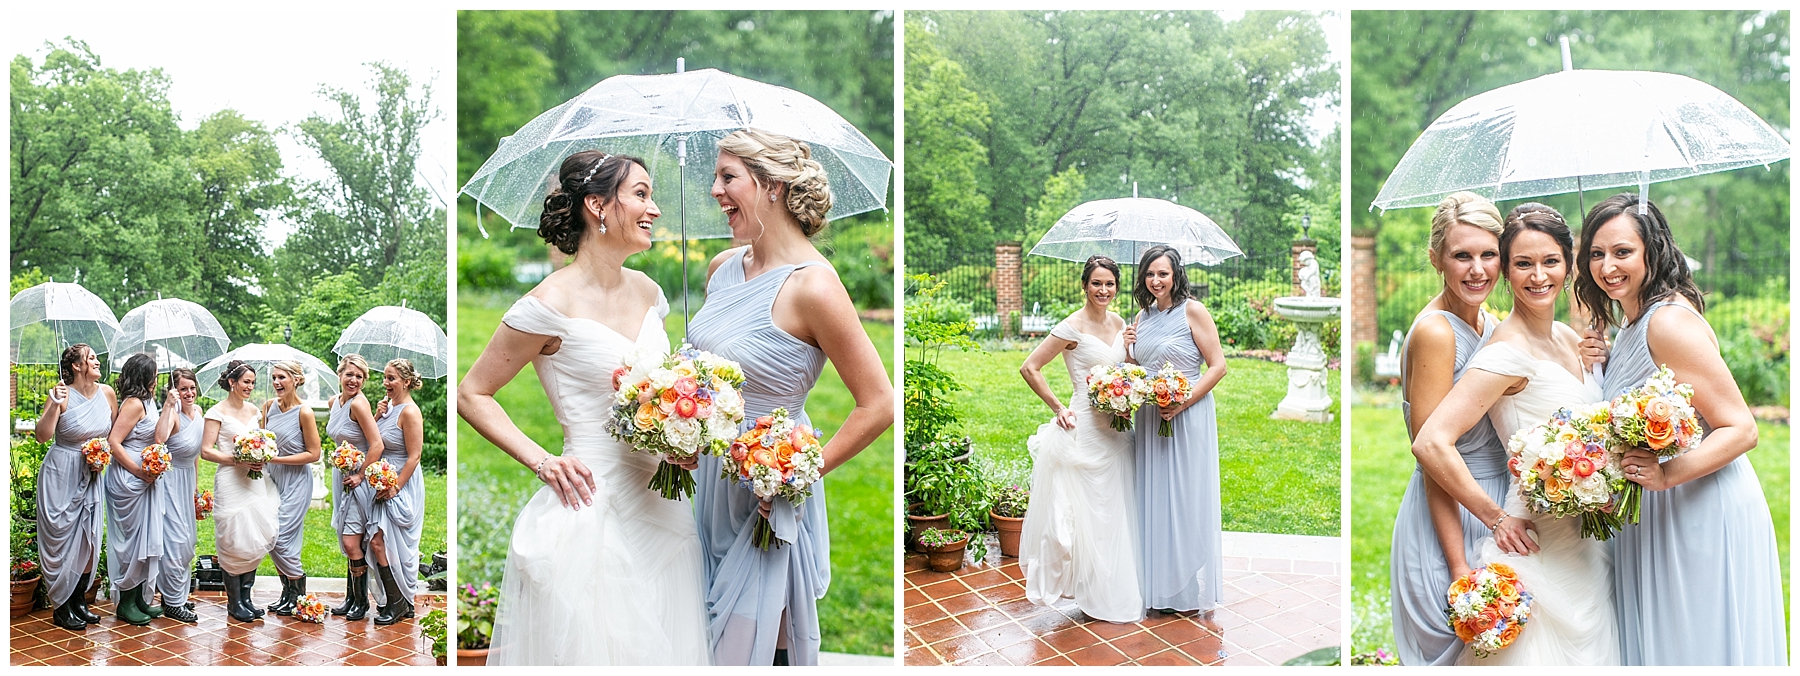 Ashley + Kevin Gramercy Mansion Rainy Day Baltimore Wedding Living Radiant Photography photos_0025.jpg